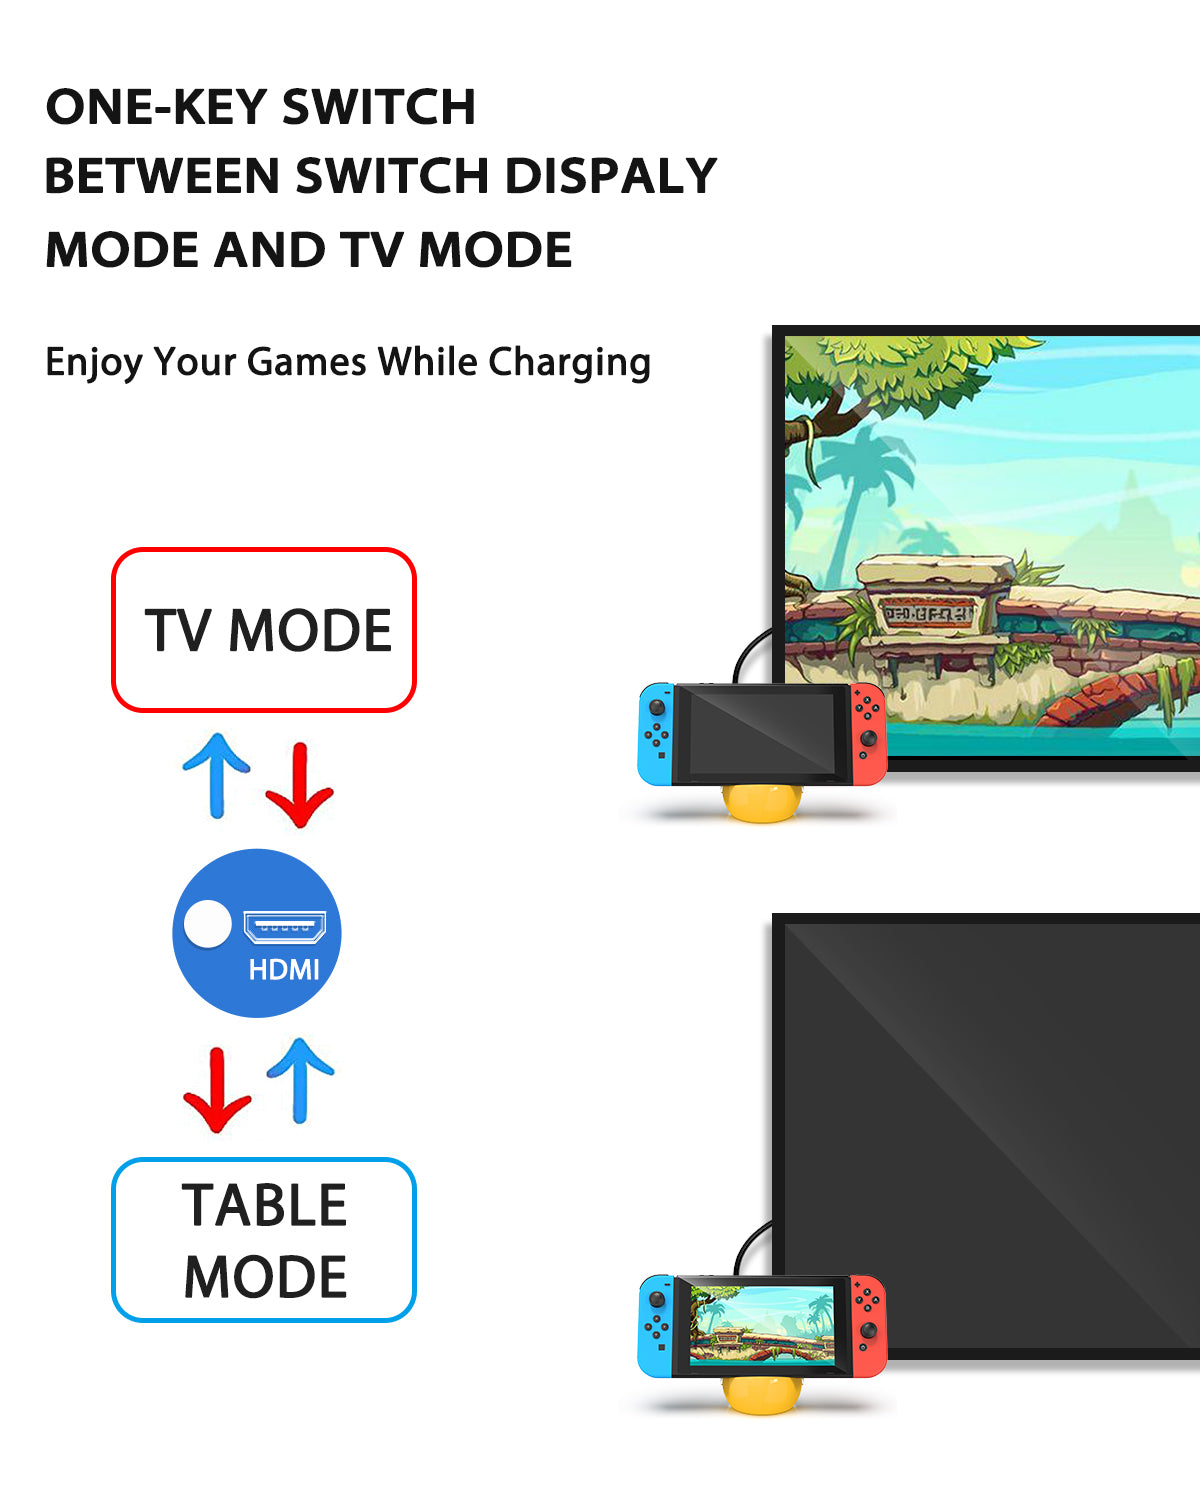 Pikachu Switch TV Dock: 4K HDMI Adapter/2 USB 3.0 Port/Type C Port